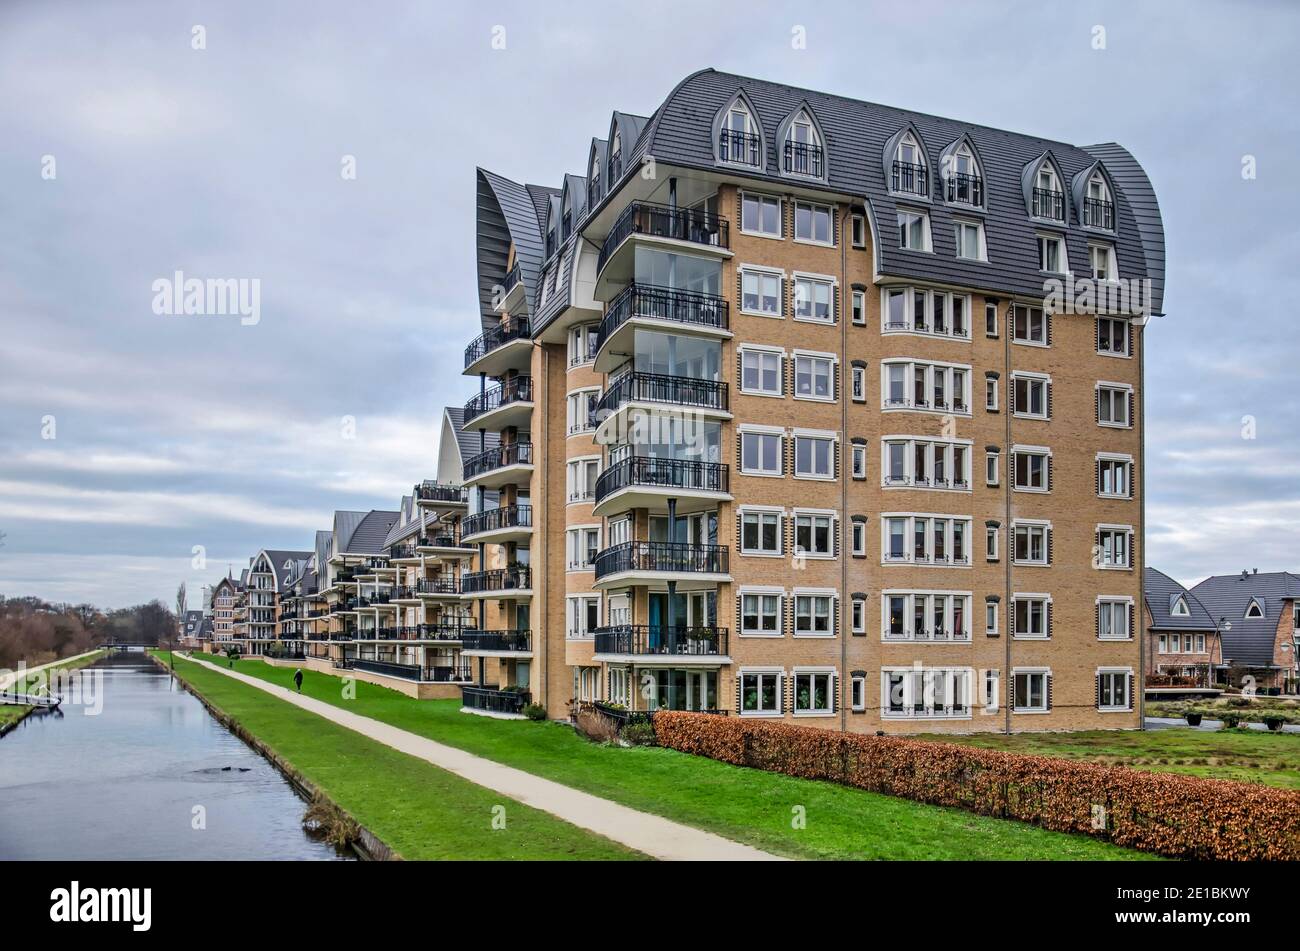 Voorschoten, The Netherlands, January 3, 2021: eight-storey residential building in Krimwijk neighbourhood with brick facades and sculptural roof in p Stock Photo